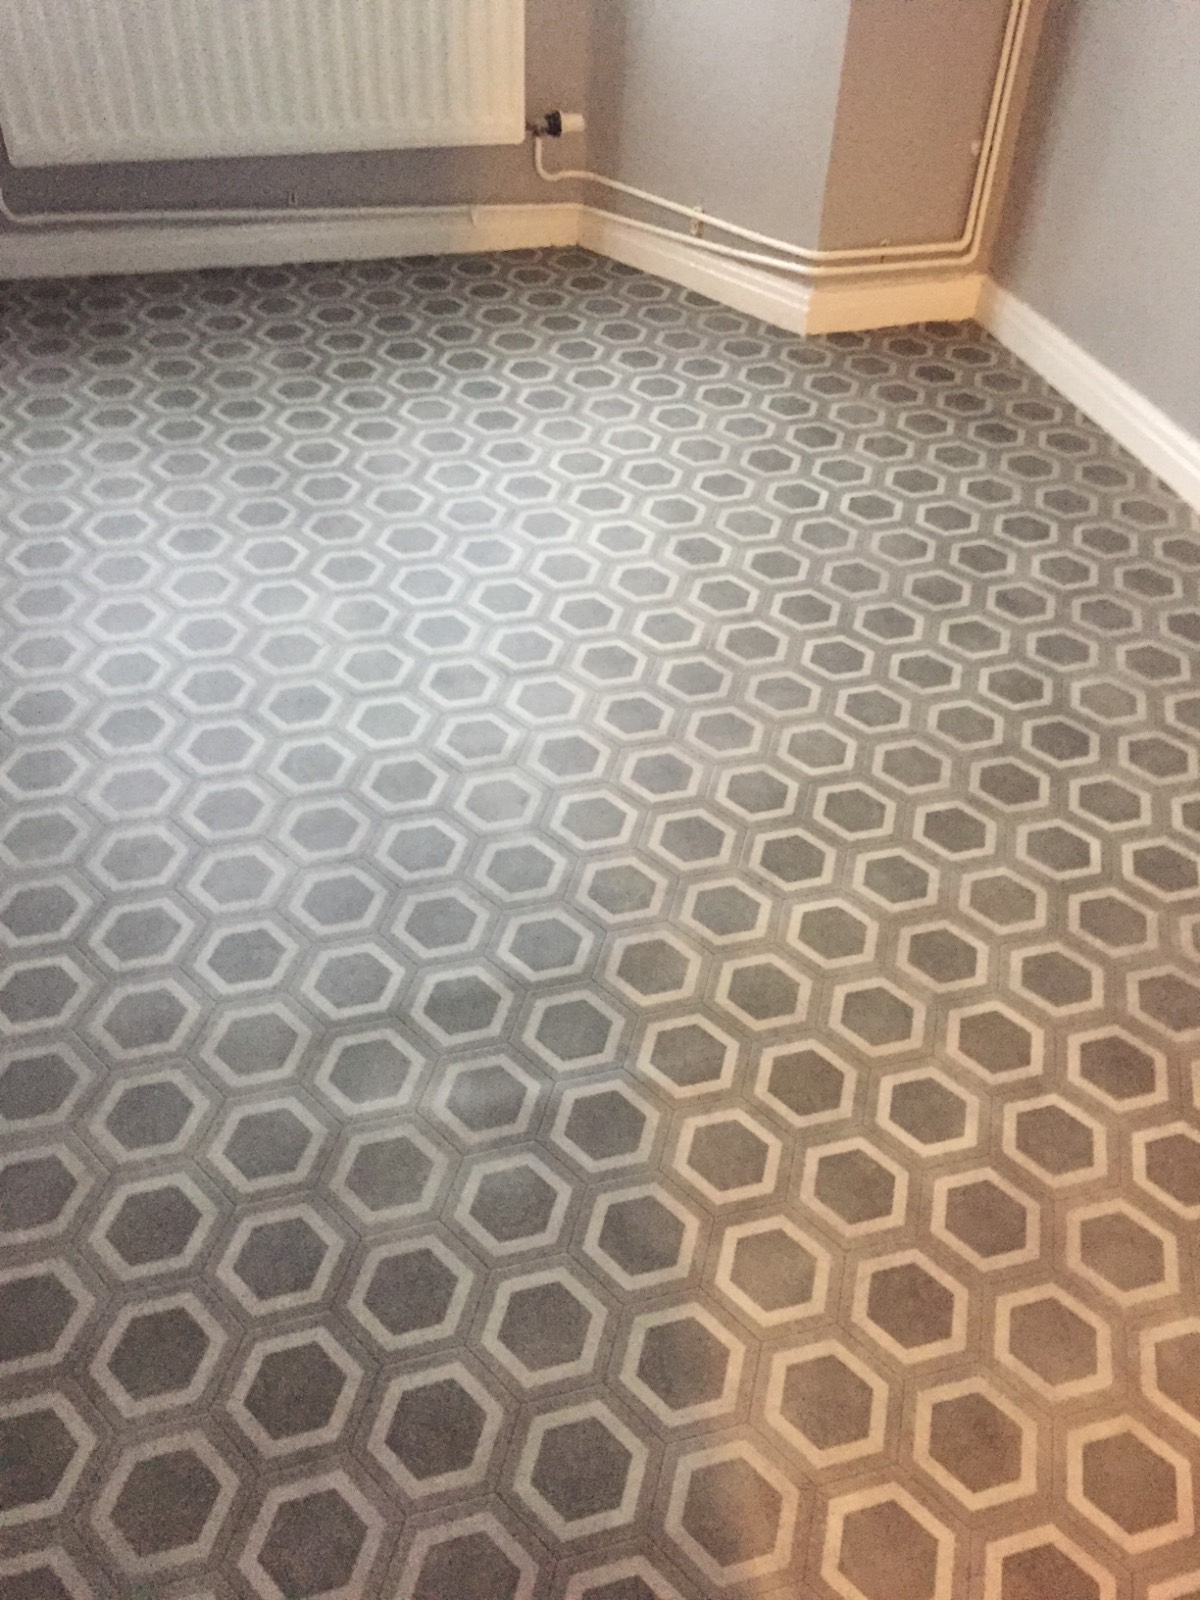 patterned vinyl flooring in living area